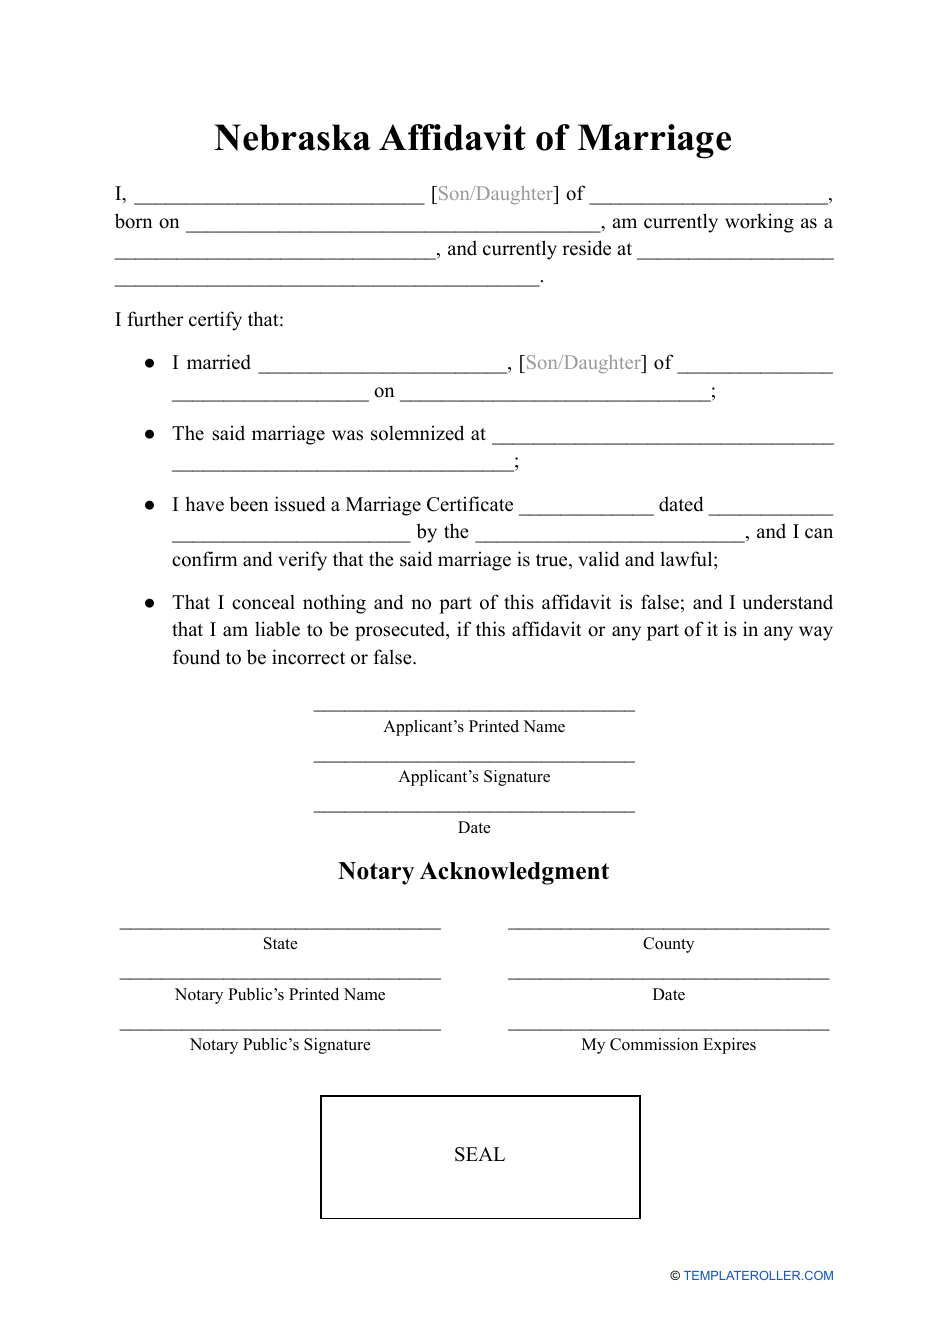 Affidavit of Marriage - Nebraska, Page 1